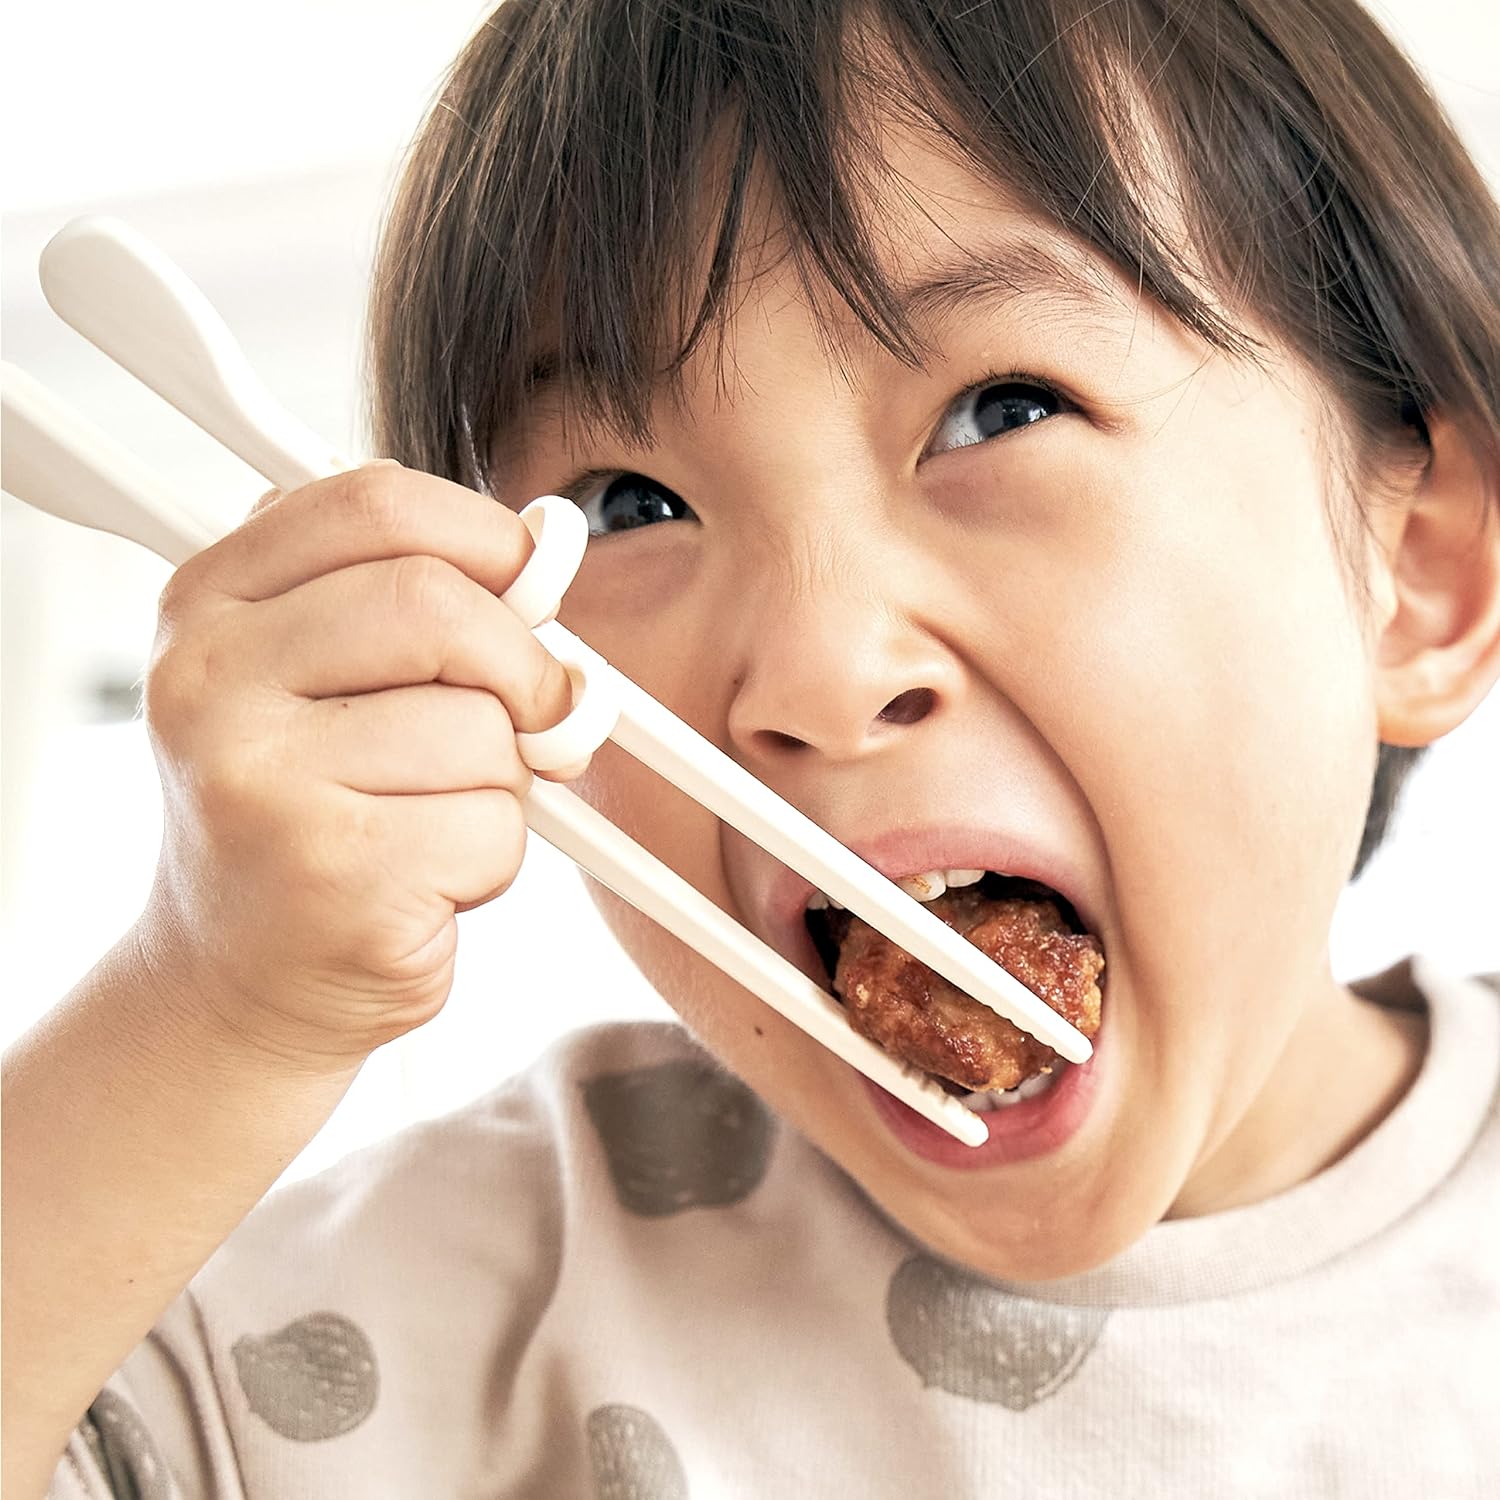 Edison mama 兒童練習筷子左手 17.5 厘米 白色 適合學齡前至早期小學生